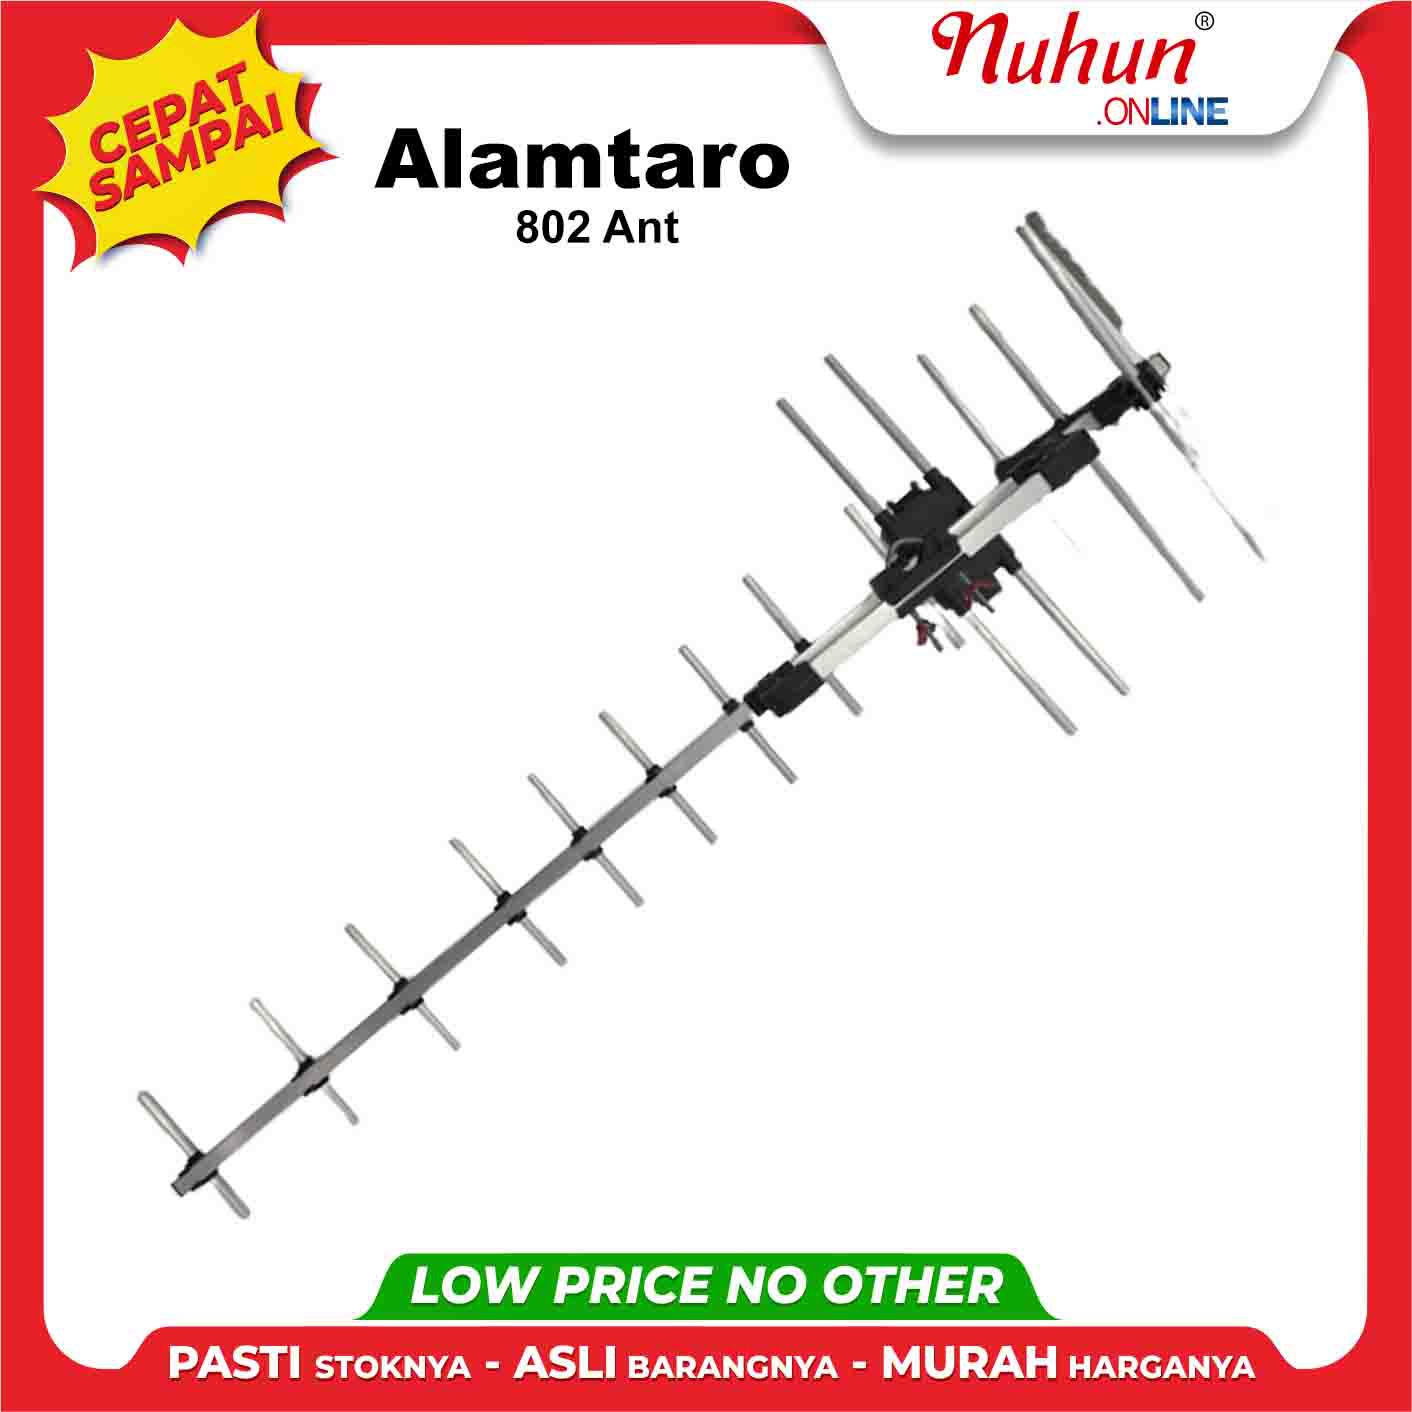 Alamtaro 802 Ant